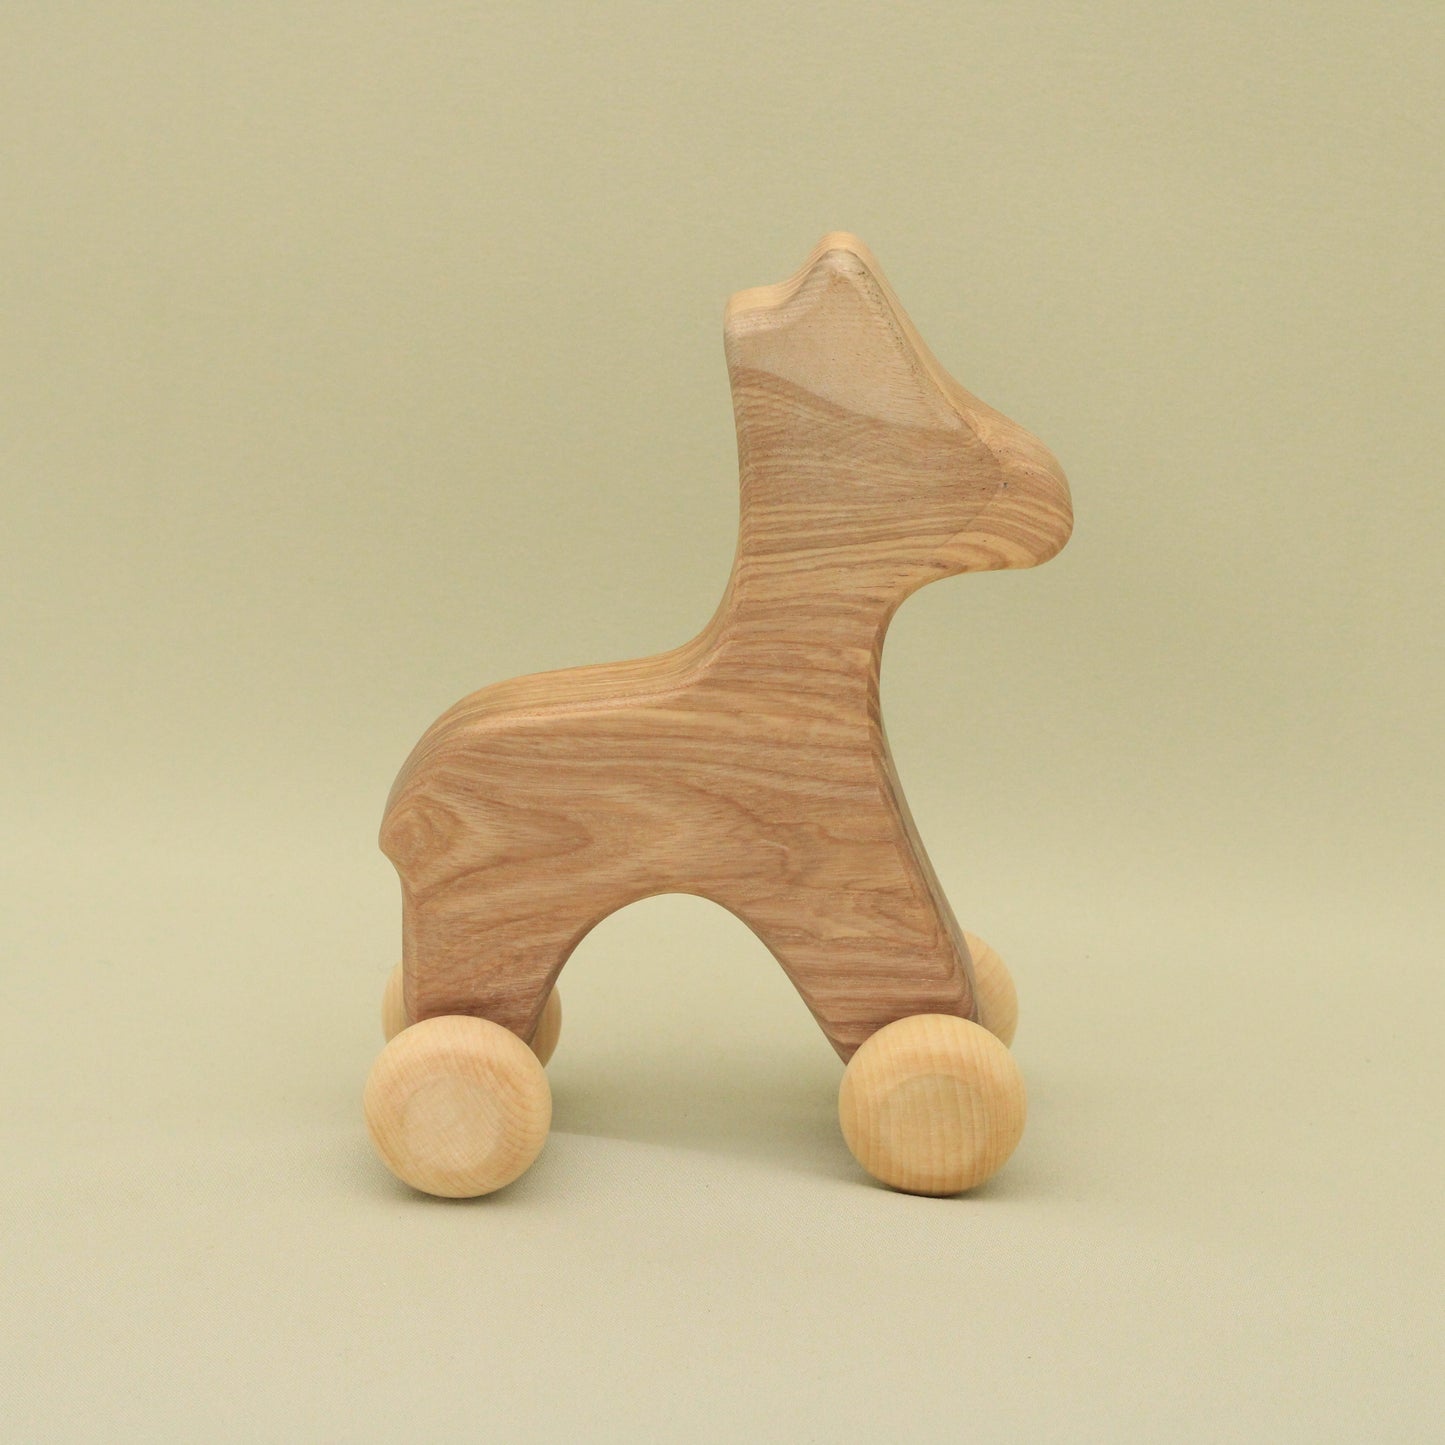 Lotes Toys Wooden Giraffe WA01